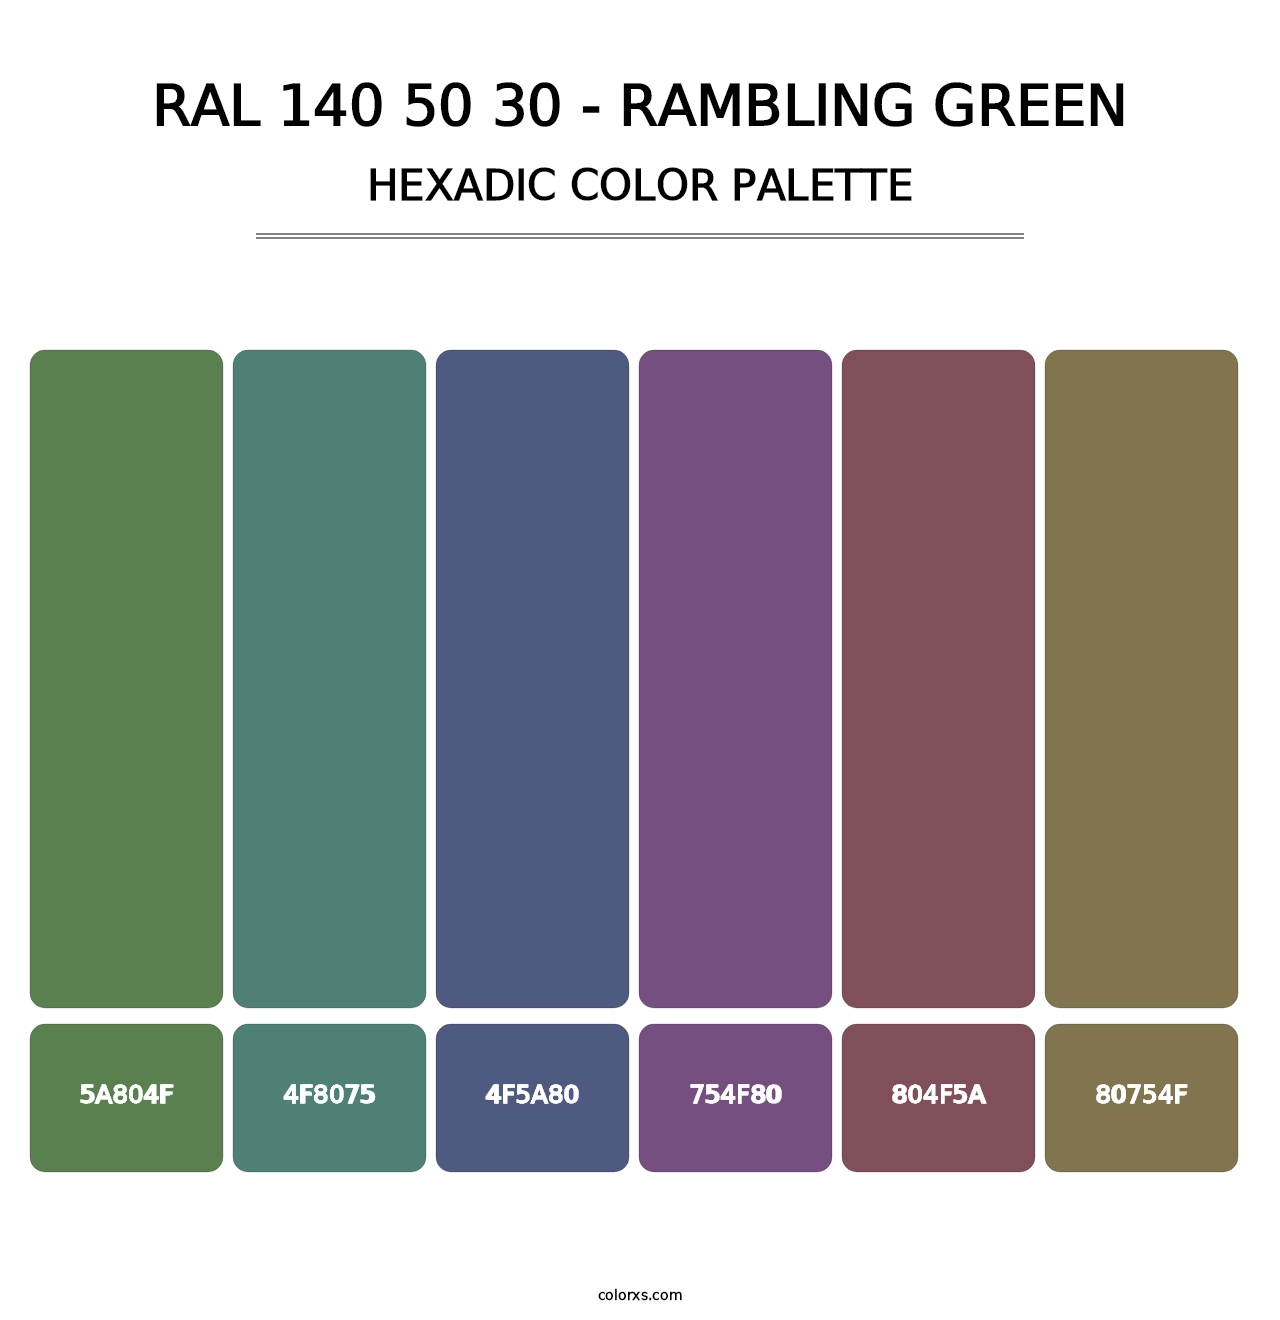 RAL 140 50 30 - Rambling Green - Hexadic Color Palette